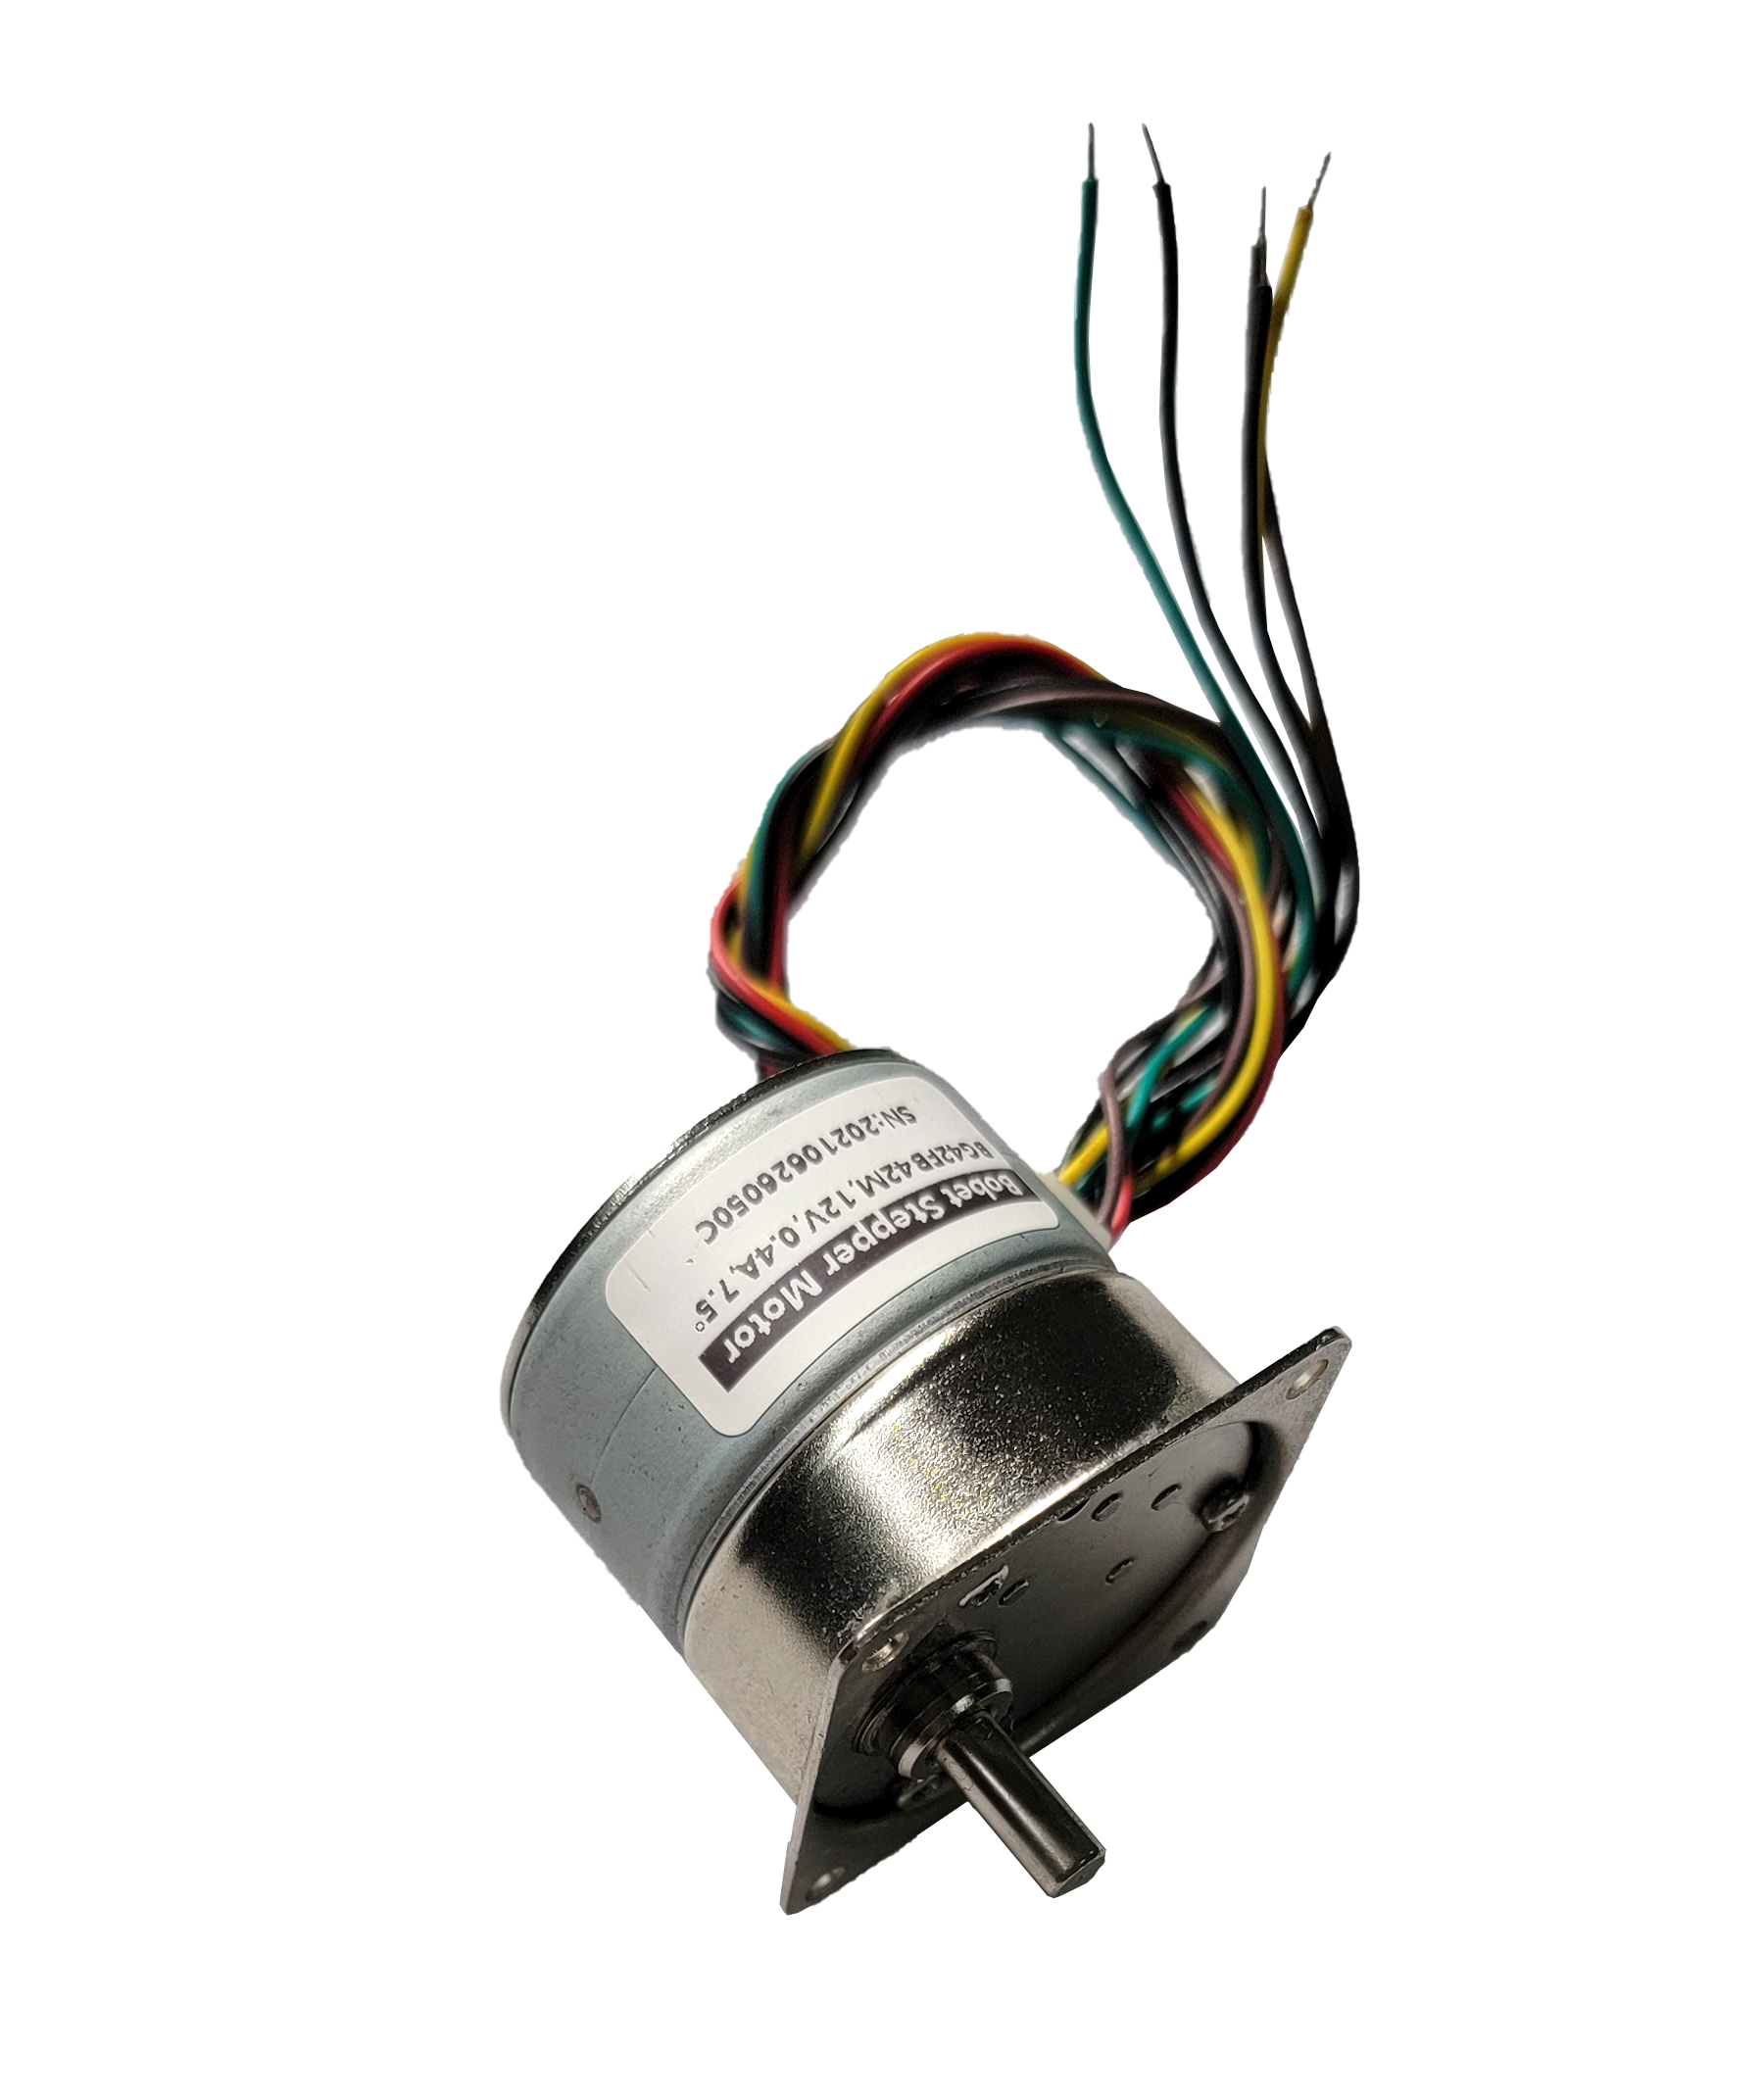 Atc Spindle Motor Supplier Manufacturer –  0.4A phase current 42mm stepper motor with gear box , 8kg.cm holding torque – Bobet